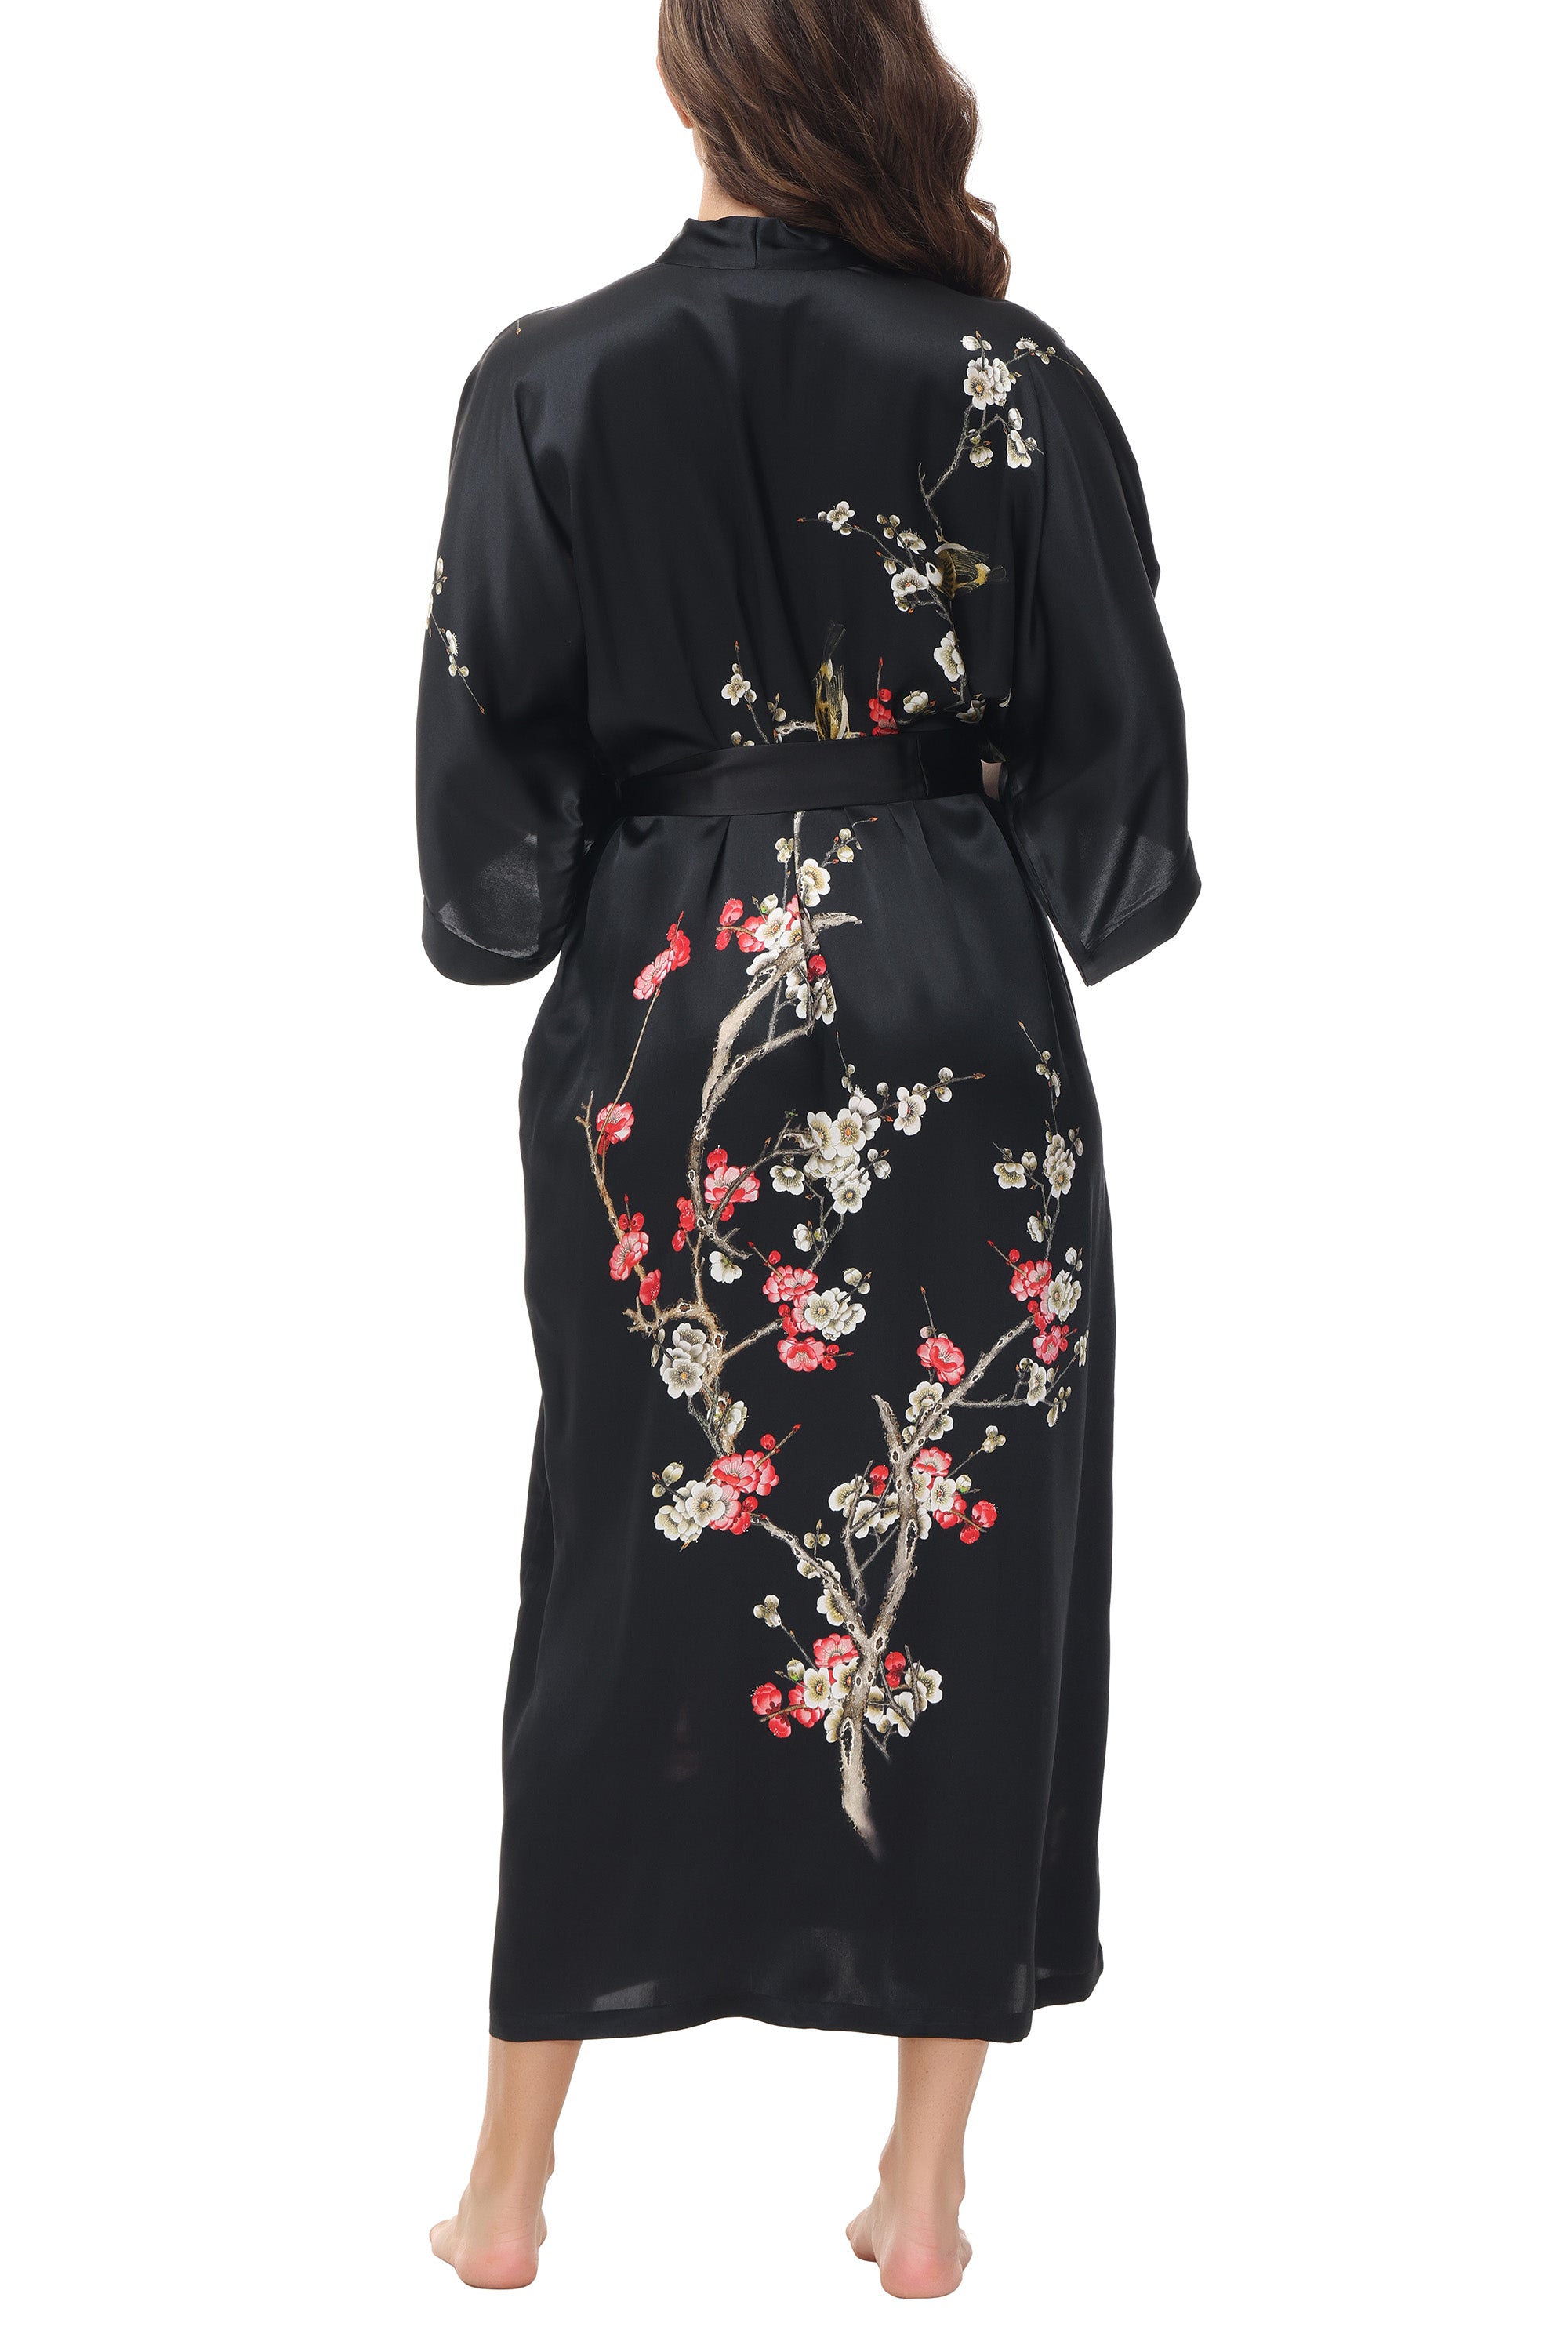 OSCAR ROSSA Women's Silk Sleepwear 100% Silk Charmeuse Long Robe Kimono -  Plum Blossom Black / M/L